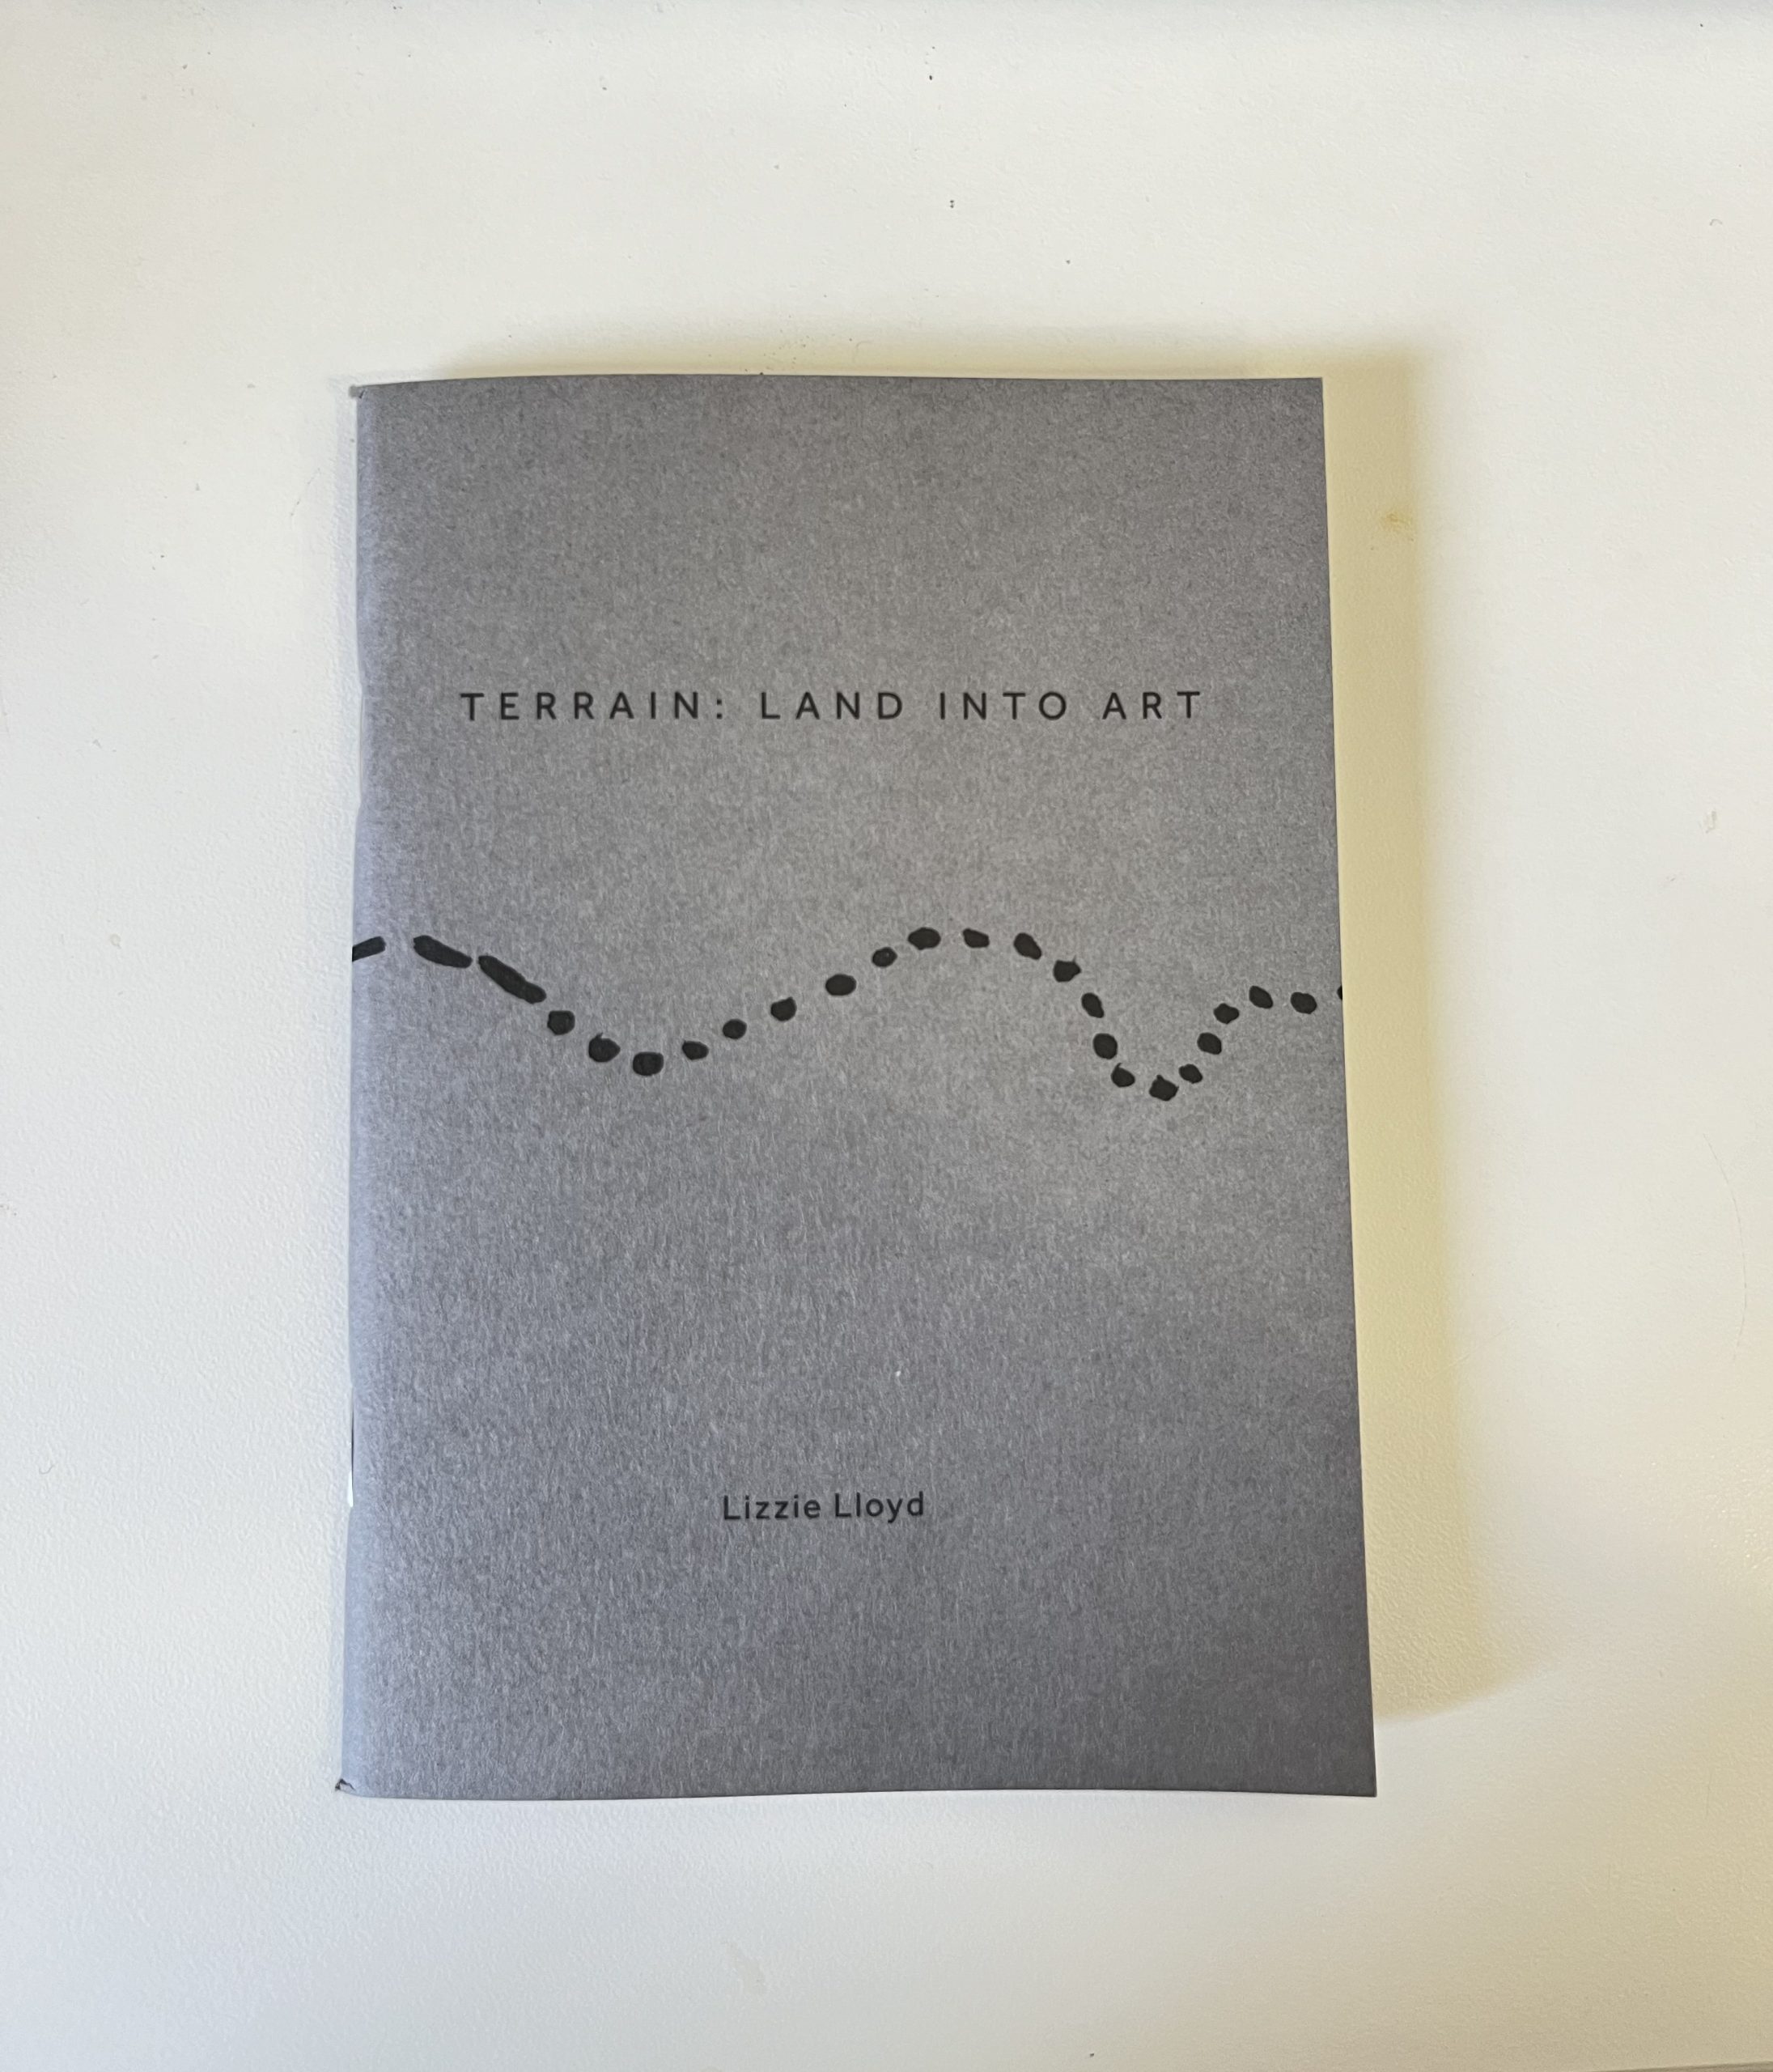 Terrain: Land into art